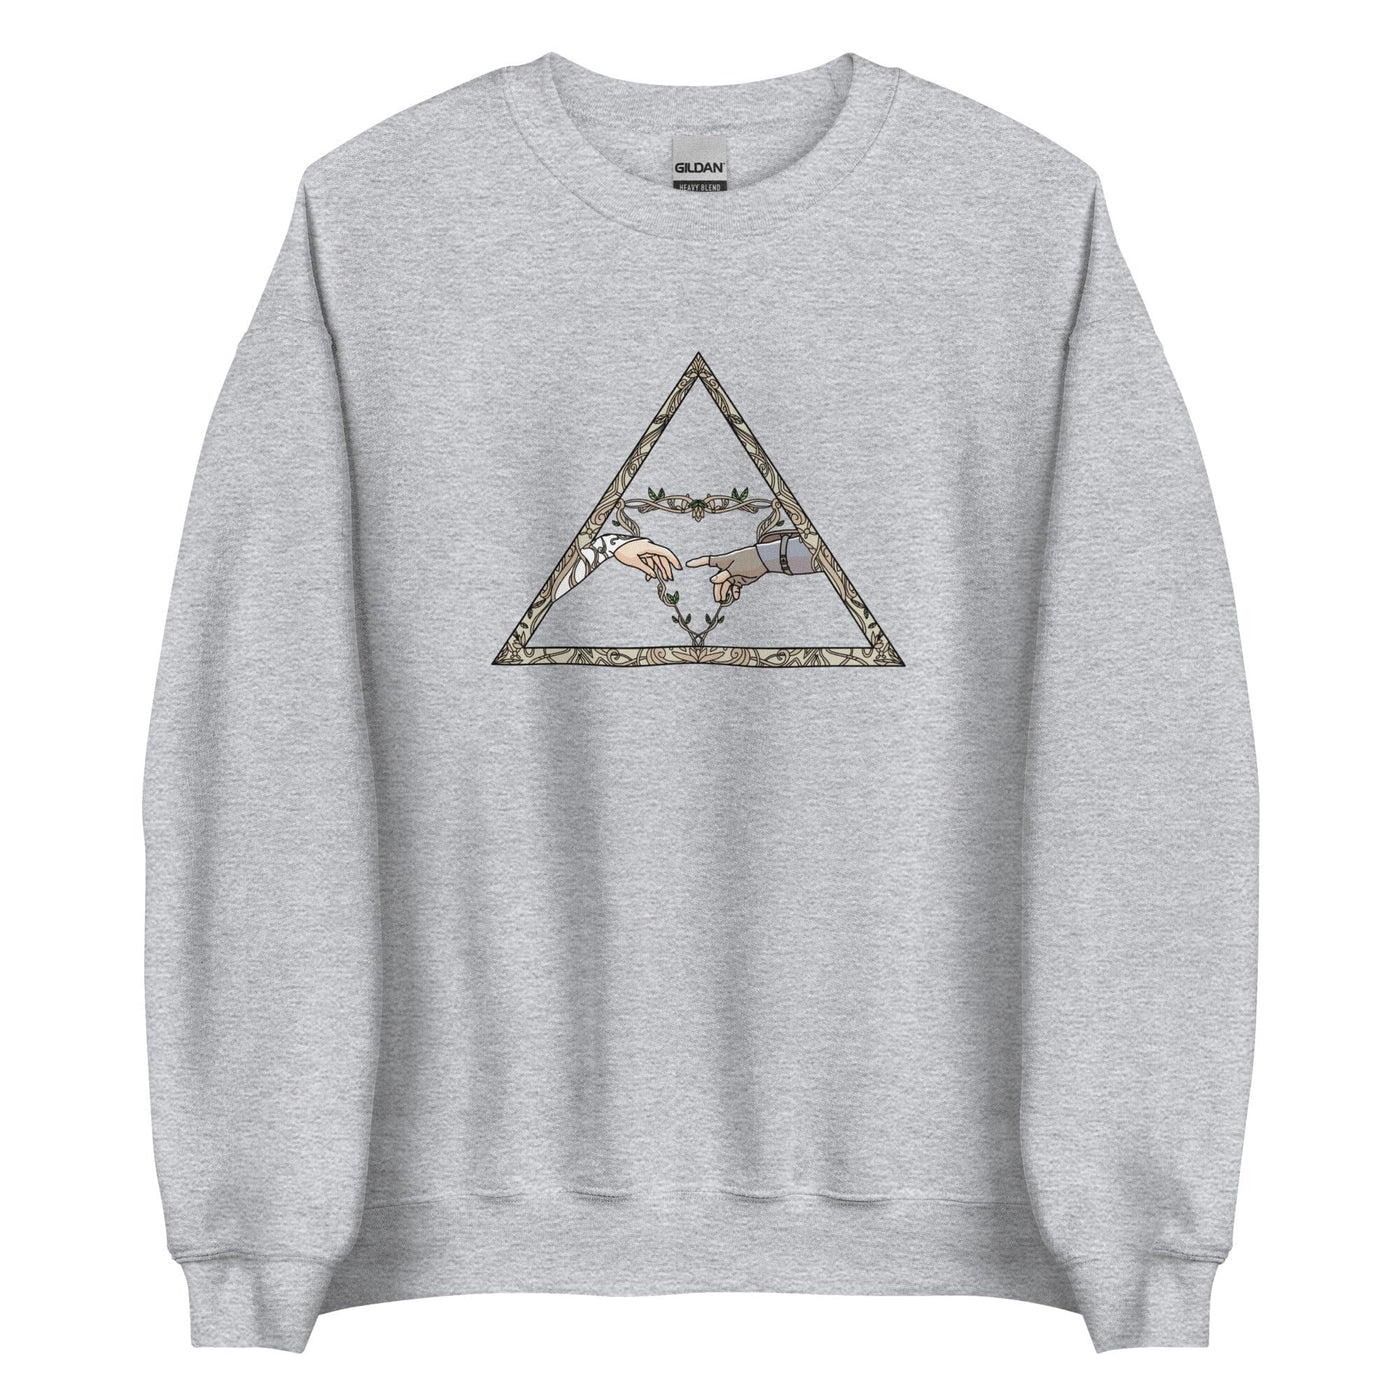 The Creation | Unisex Sweatshirt | The Legend of Zelda Sweatshirts Threads and Thistles Inventory Sport Grey S 